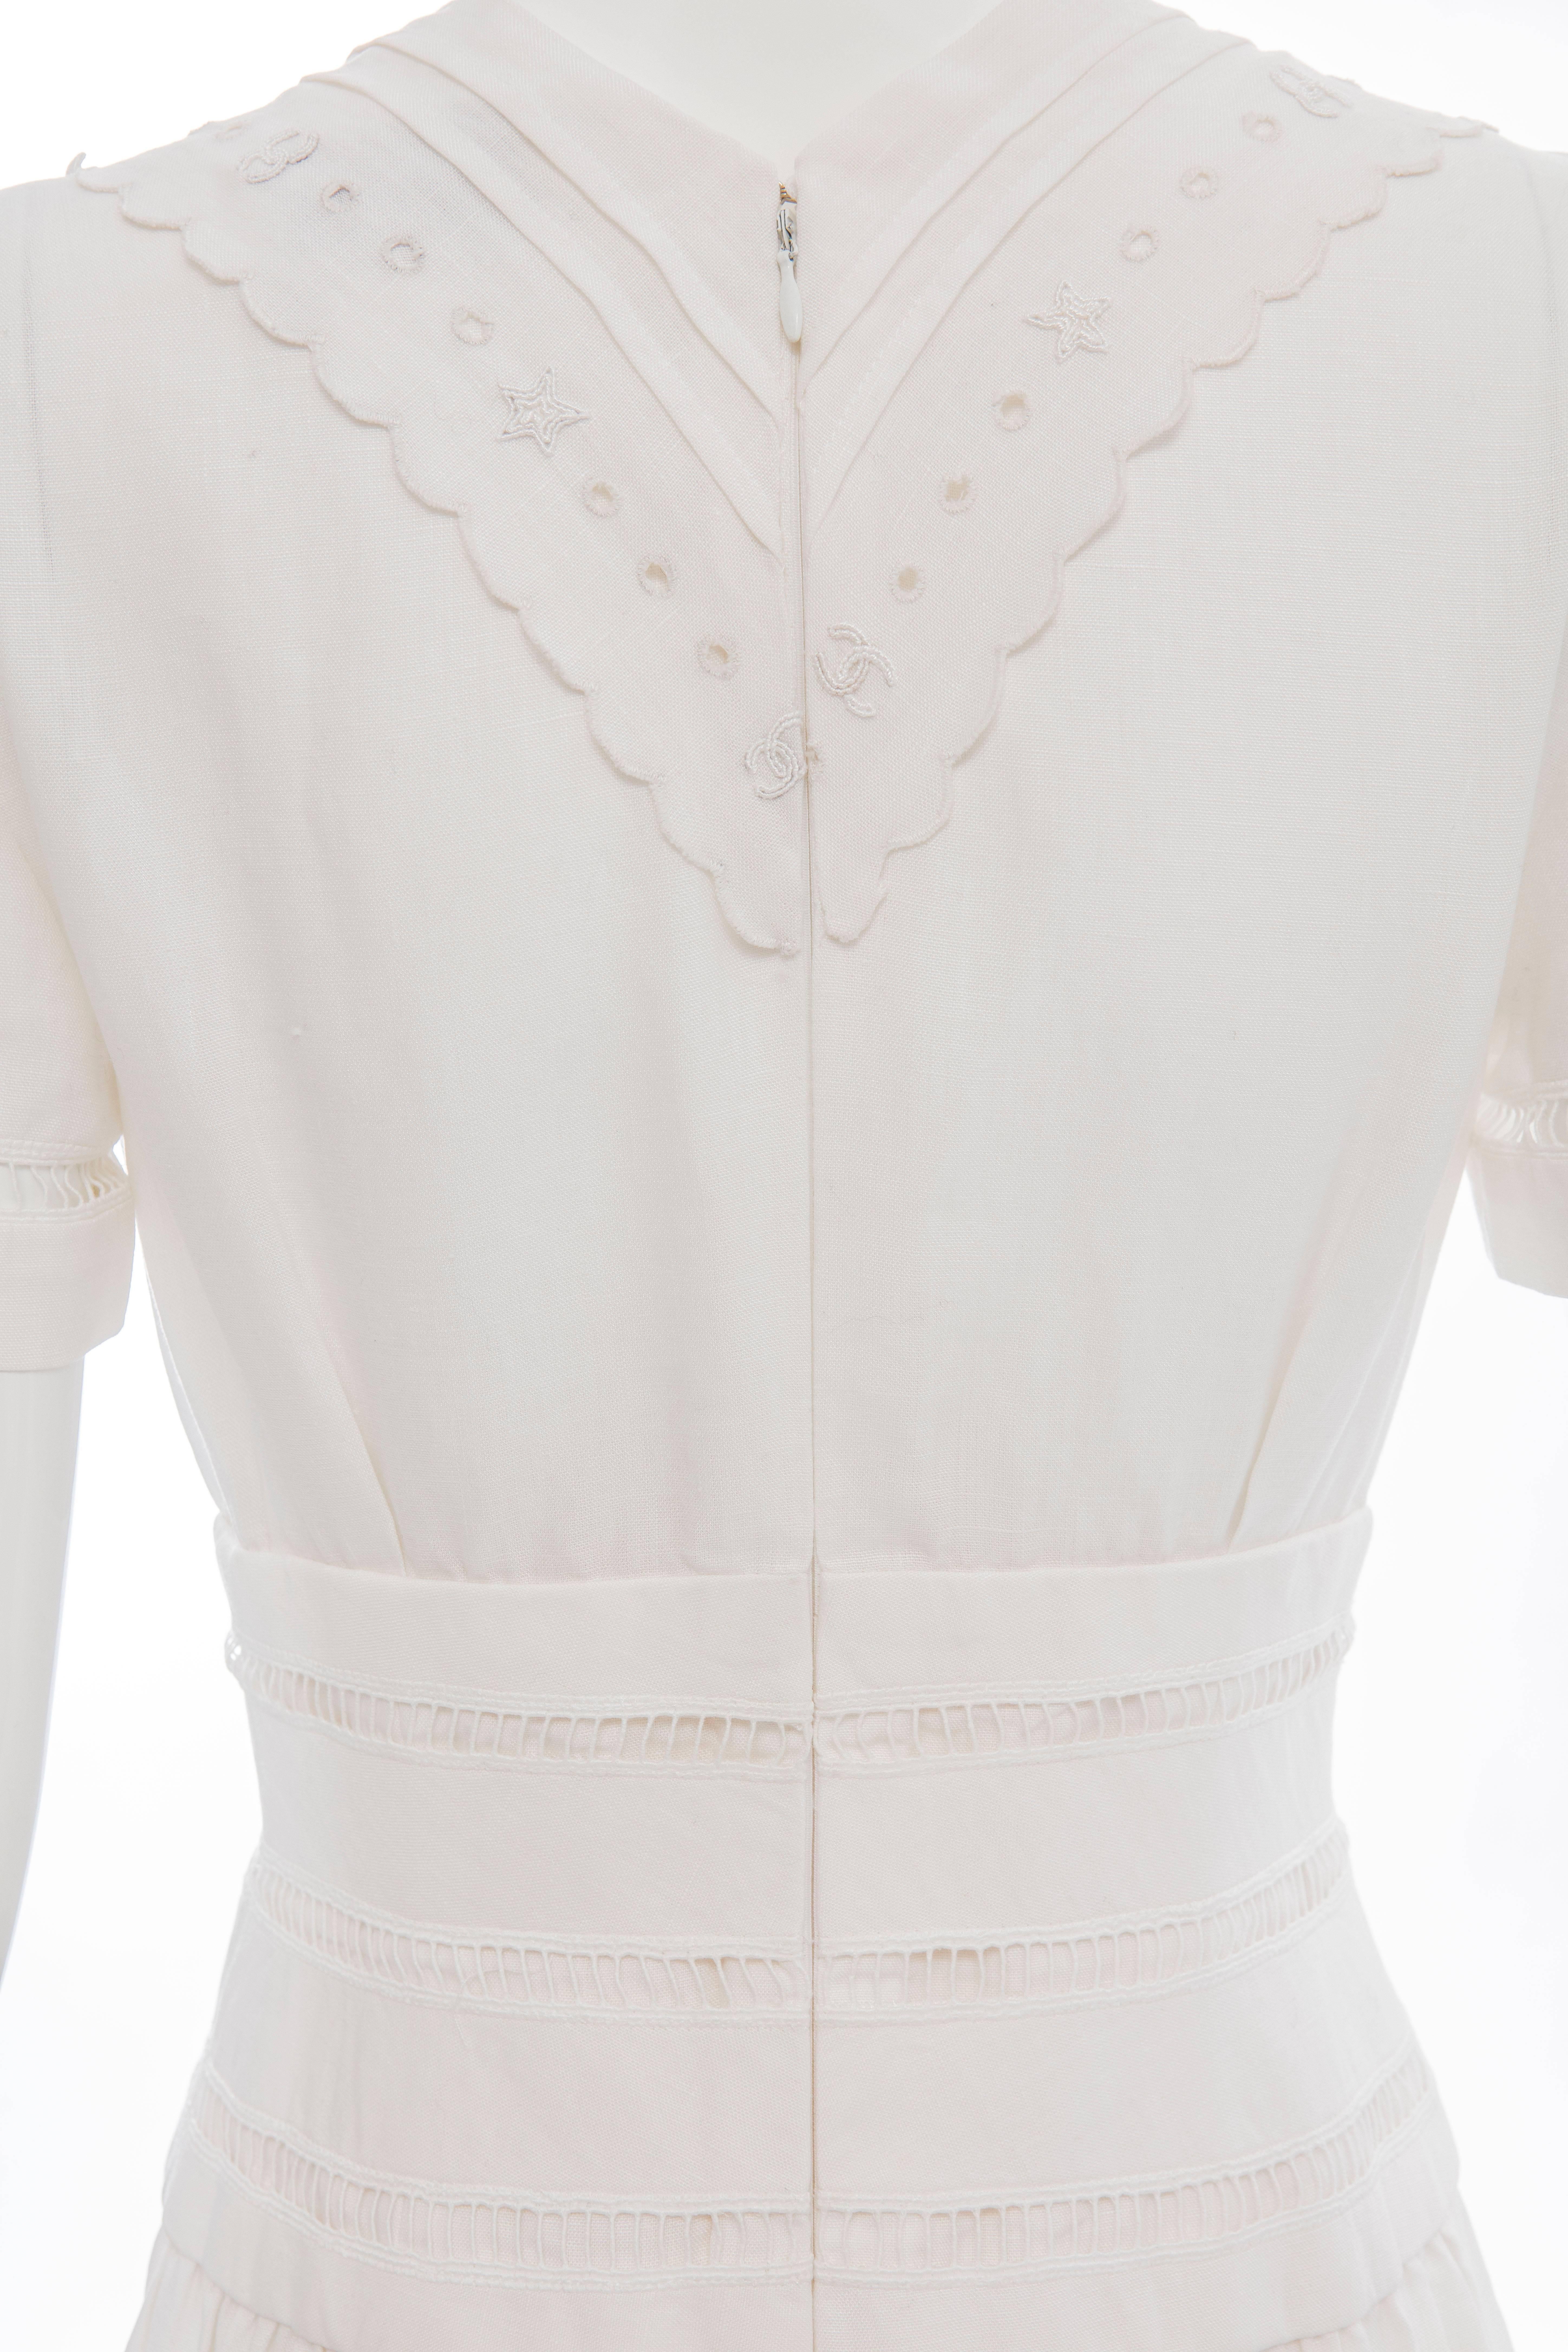 Chanel Short Sleeve Whitework Embroidered Linen Dress, Circa 1980's 3